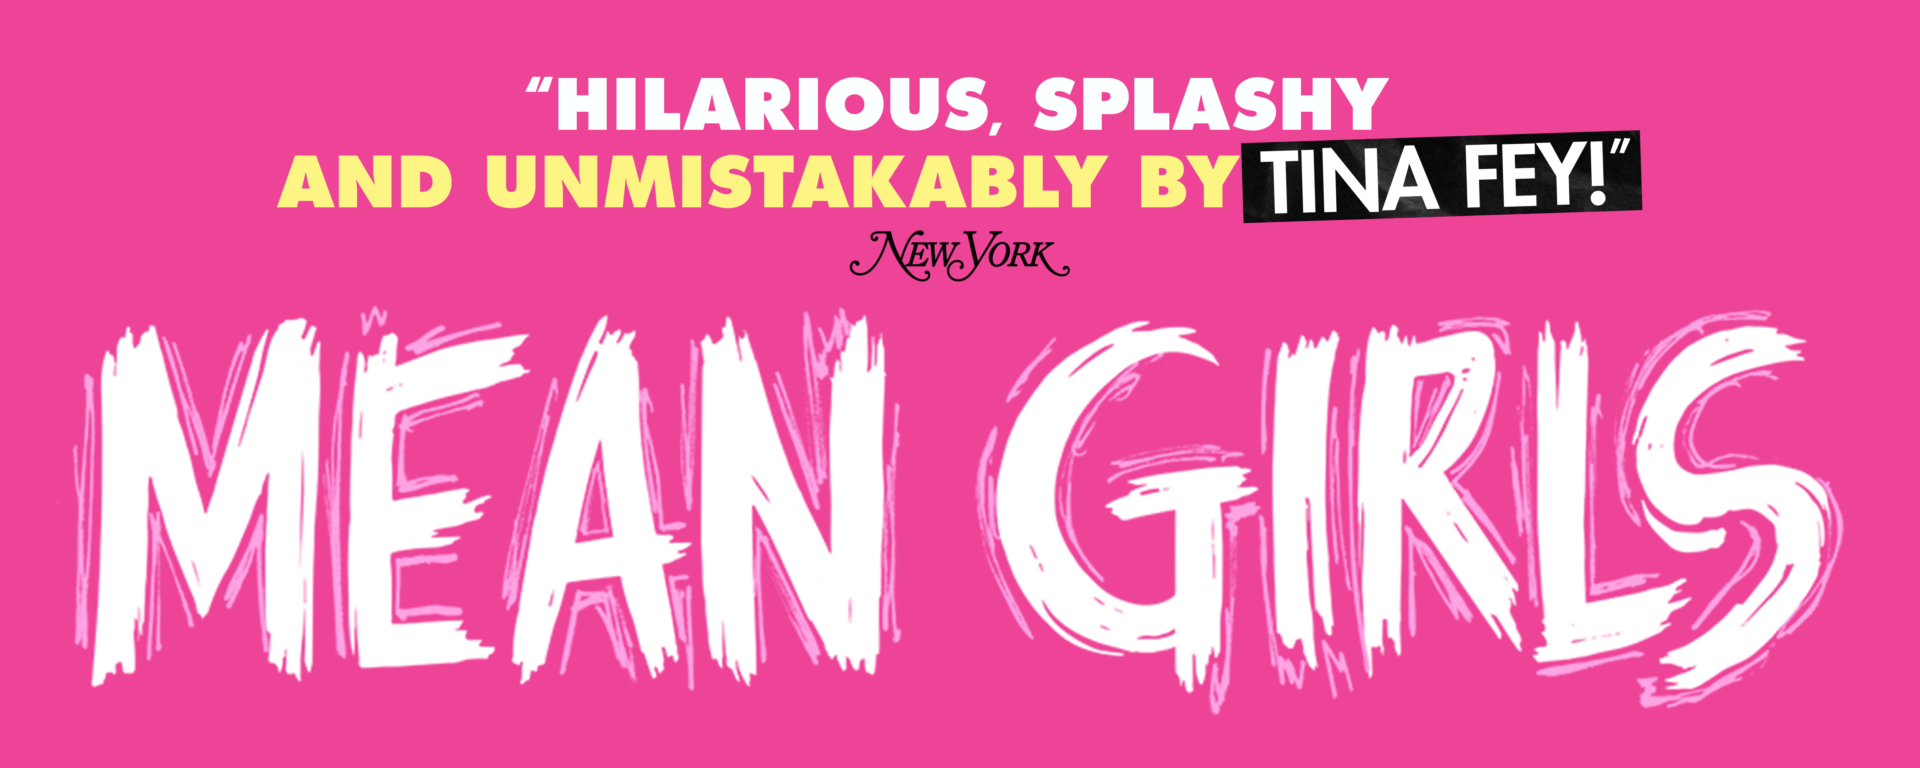 "Hilarious, Splashy and Unmistabkably by Tina Fey!" - New York magazine, Mean Girls